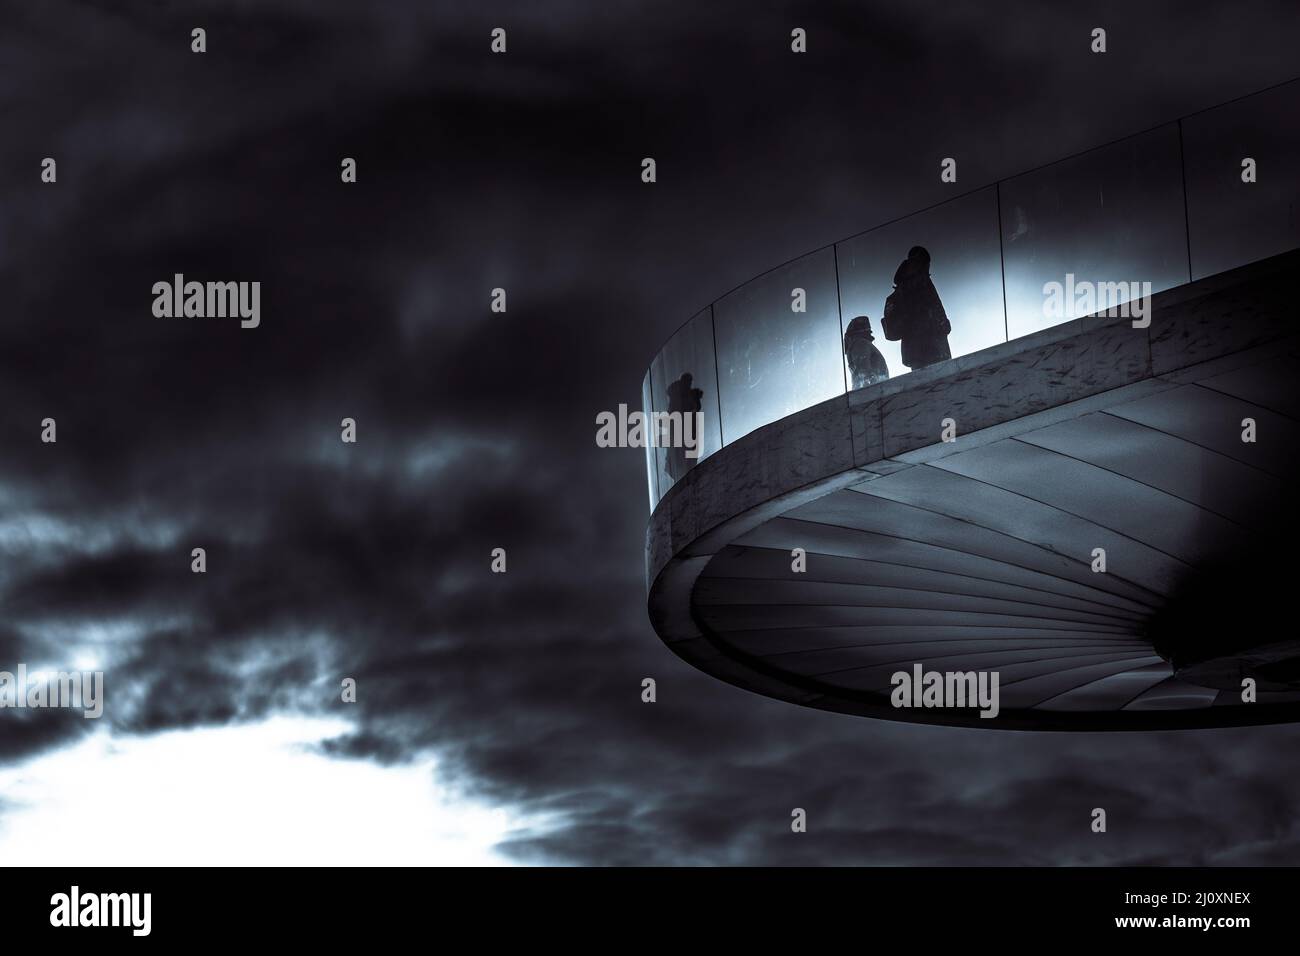 15.03.2022. Mosca, Russia. Persone sul ponte di osservazione nel Parco Zaryadye a Mosca. Foto di alta qualità Foto Stock